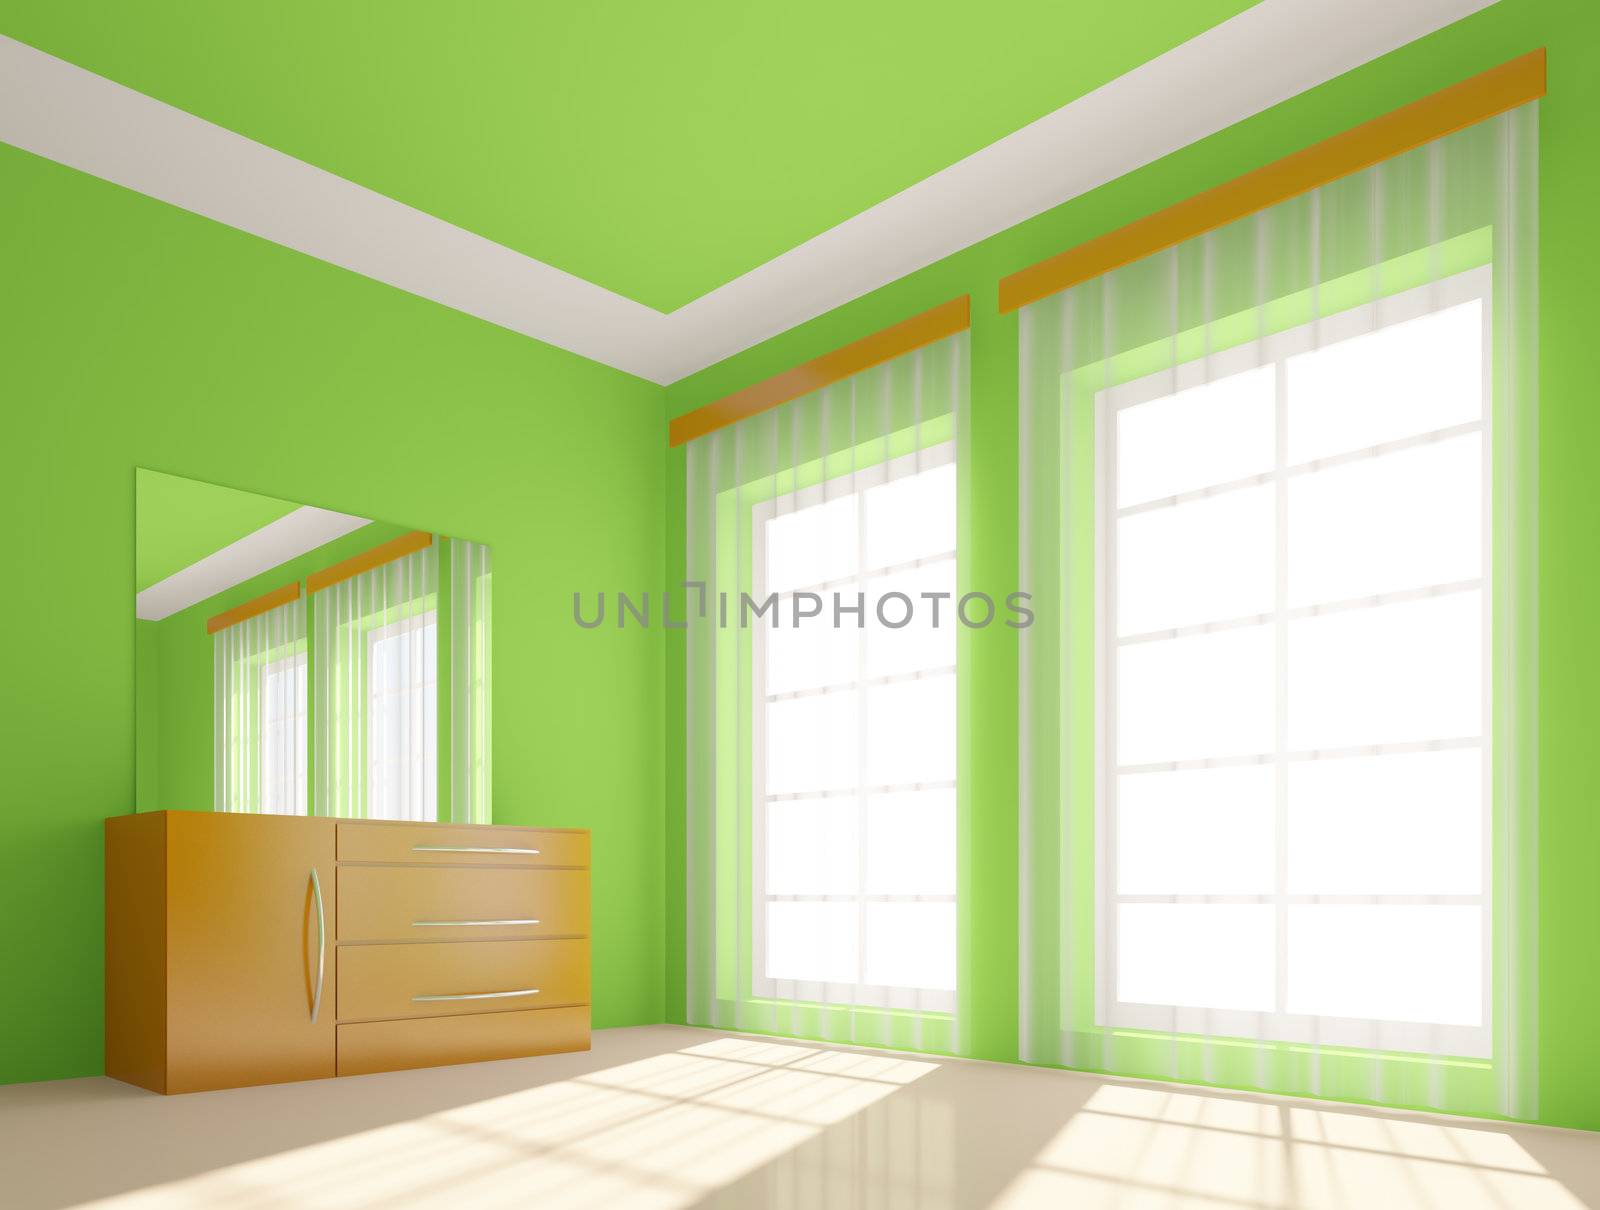 Green Room by maxkrasnov